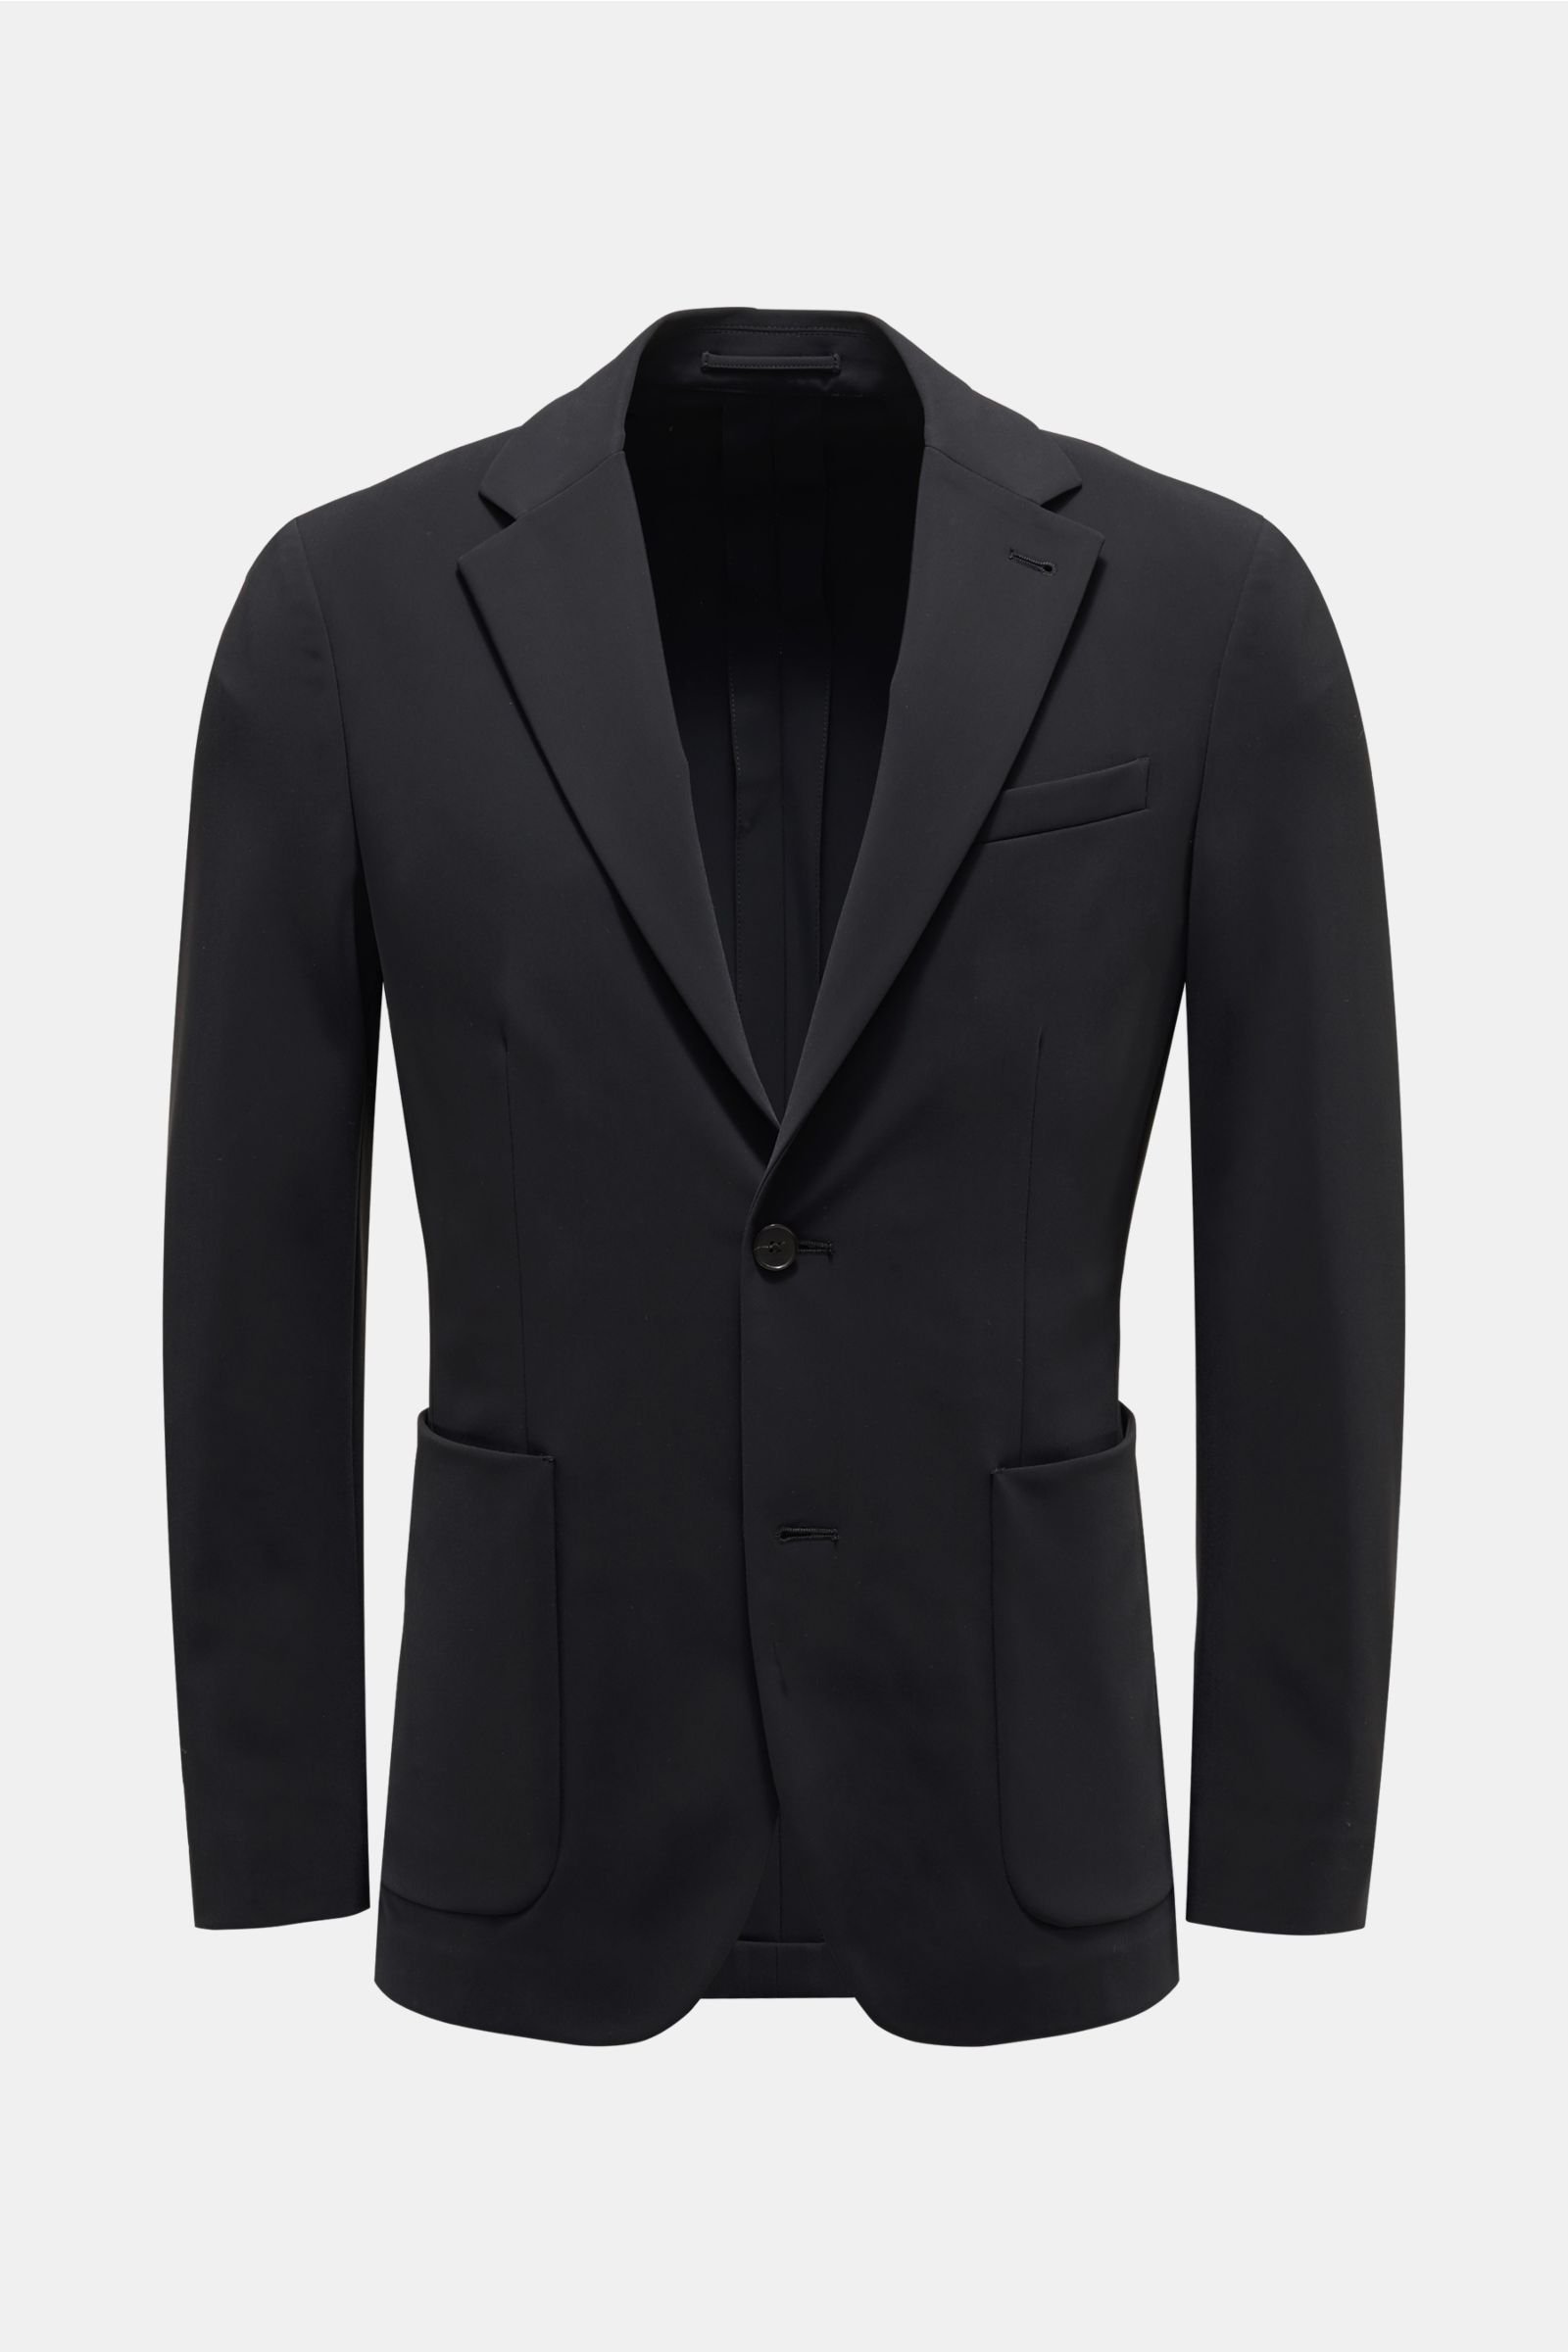 Jersey smart-casual jacket 'Brera' black